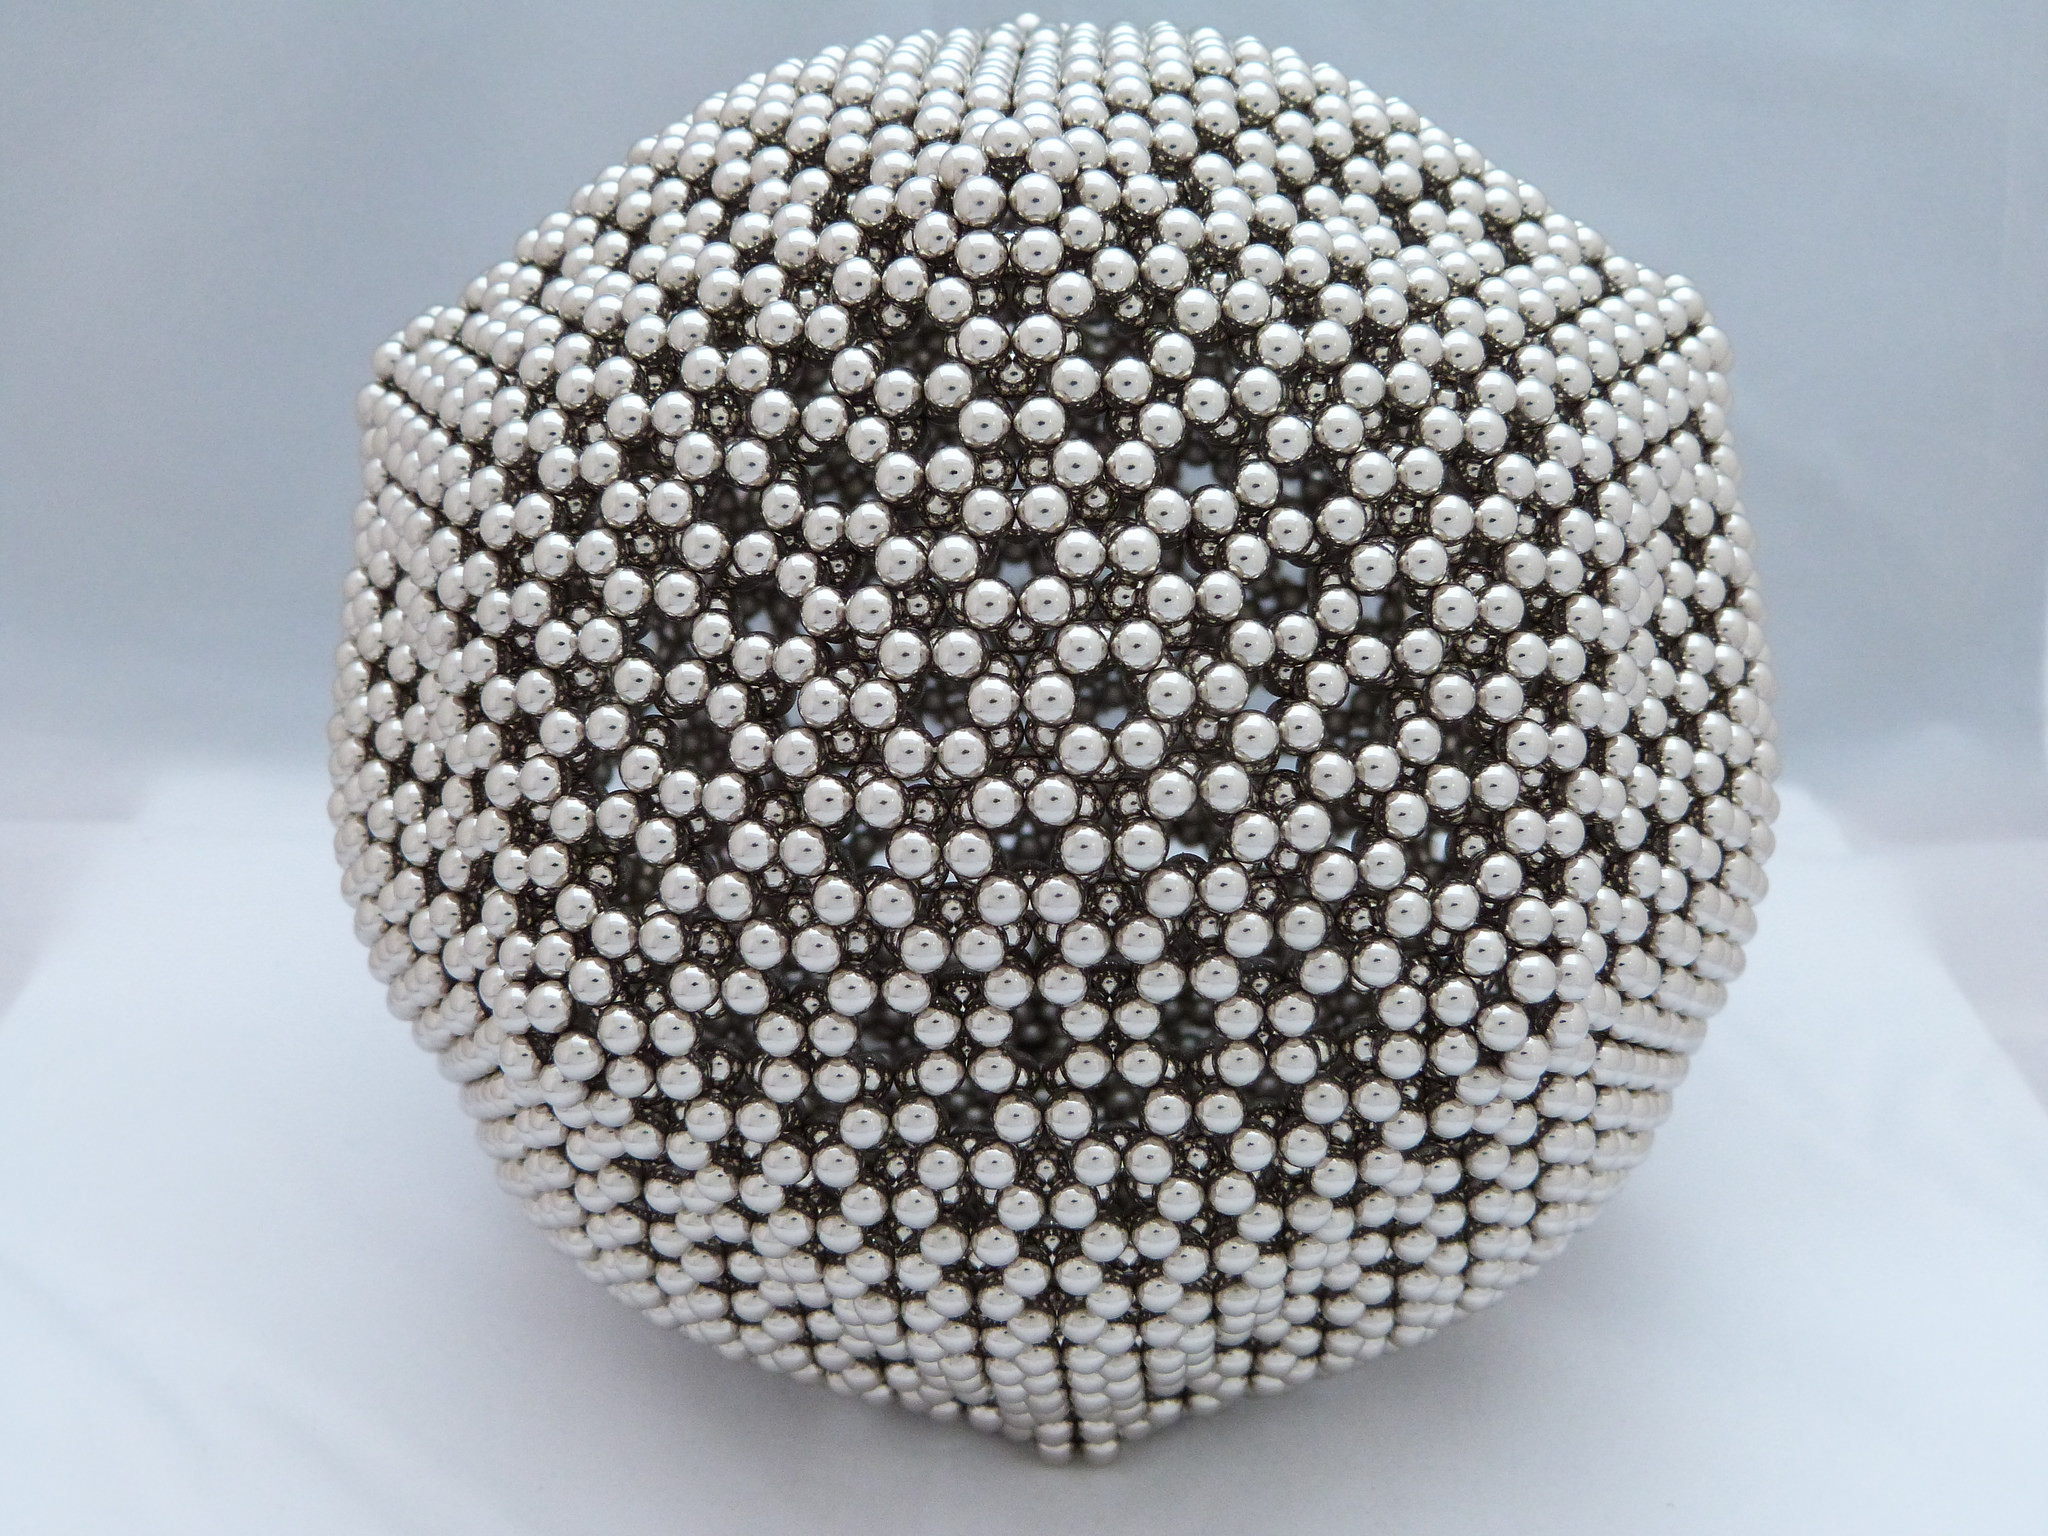 216 magnetic balls 5mm